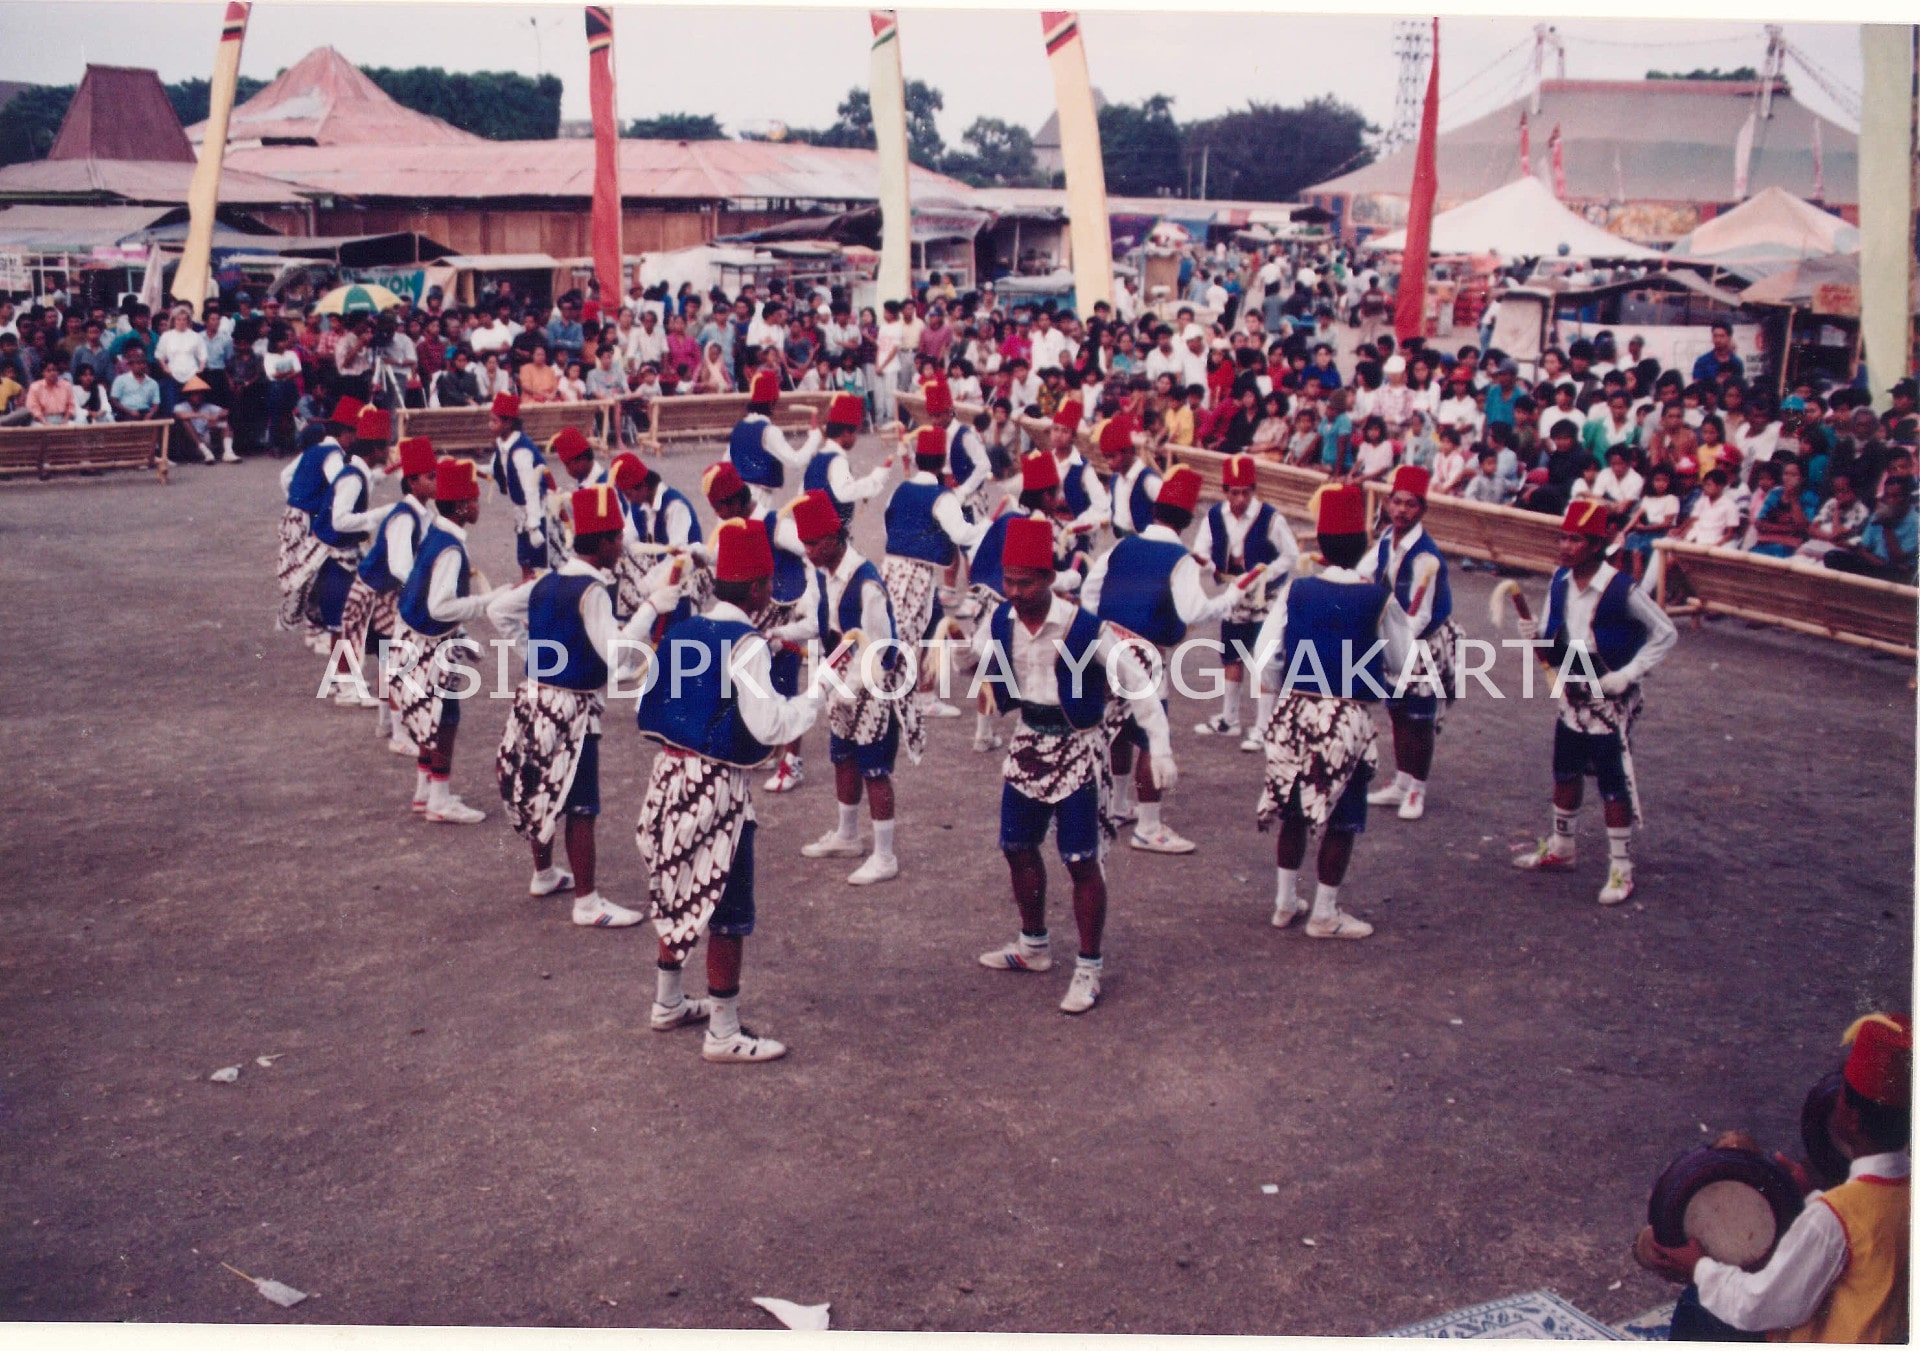 Penari Badui dari Sleman beraksi menari di depan pengunjung sekaten berhadap-hadapan sesama penari sebanyak 24 orang dalam rangka serangkaian kegiatan sekaten tahun 1991